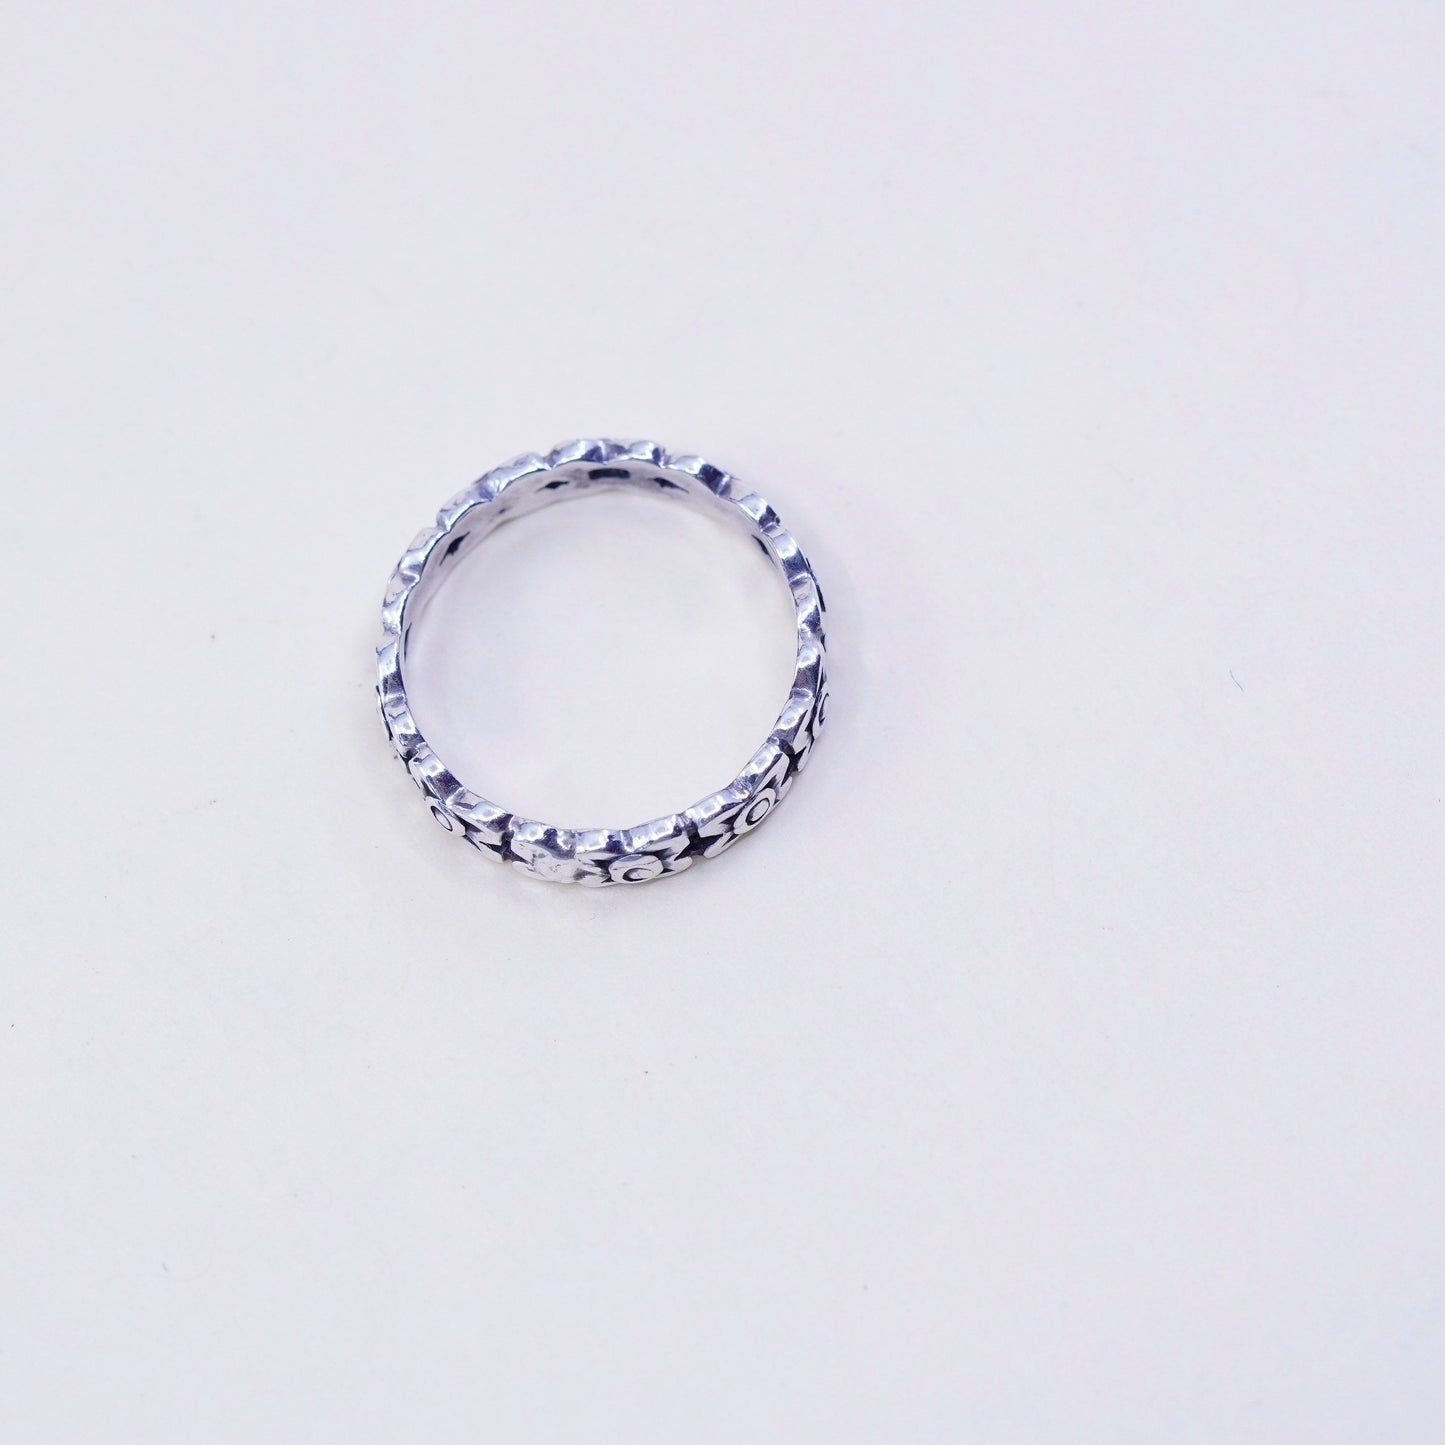 Size 6, vintage sterling silver handmade ring, 925 floral band, stamped 925